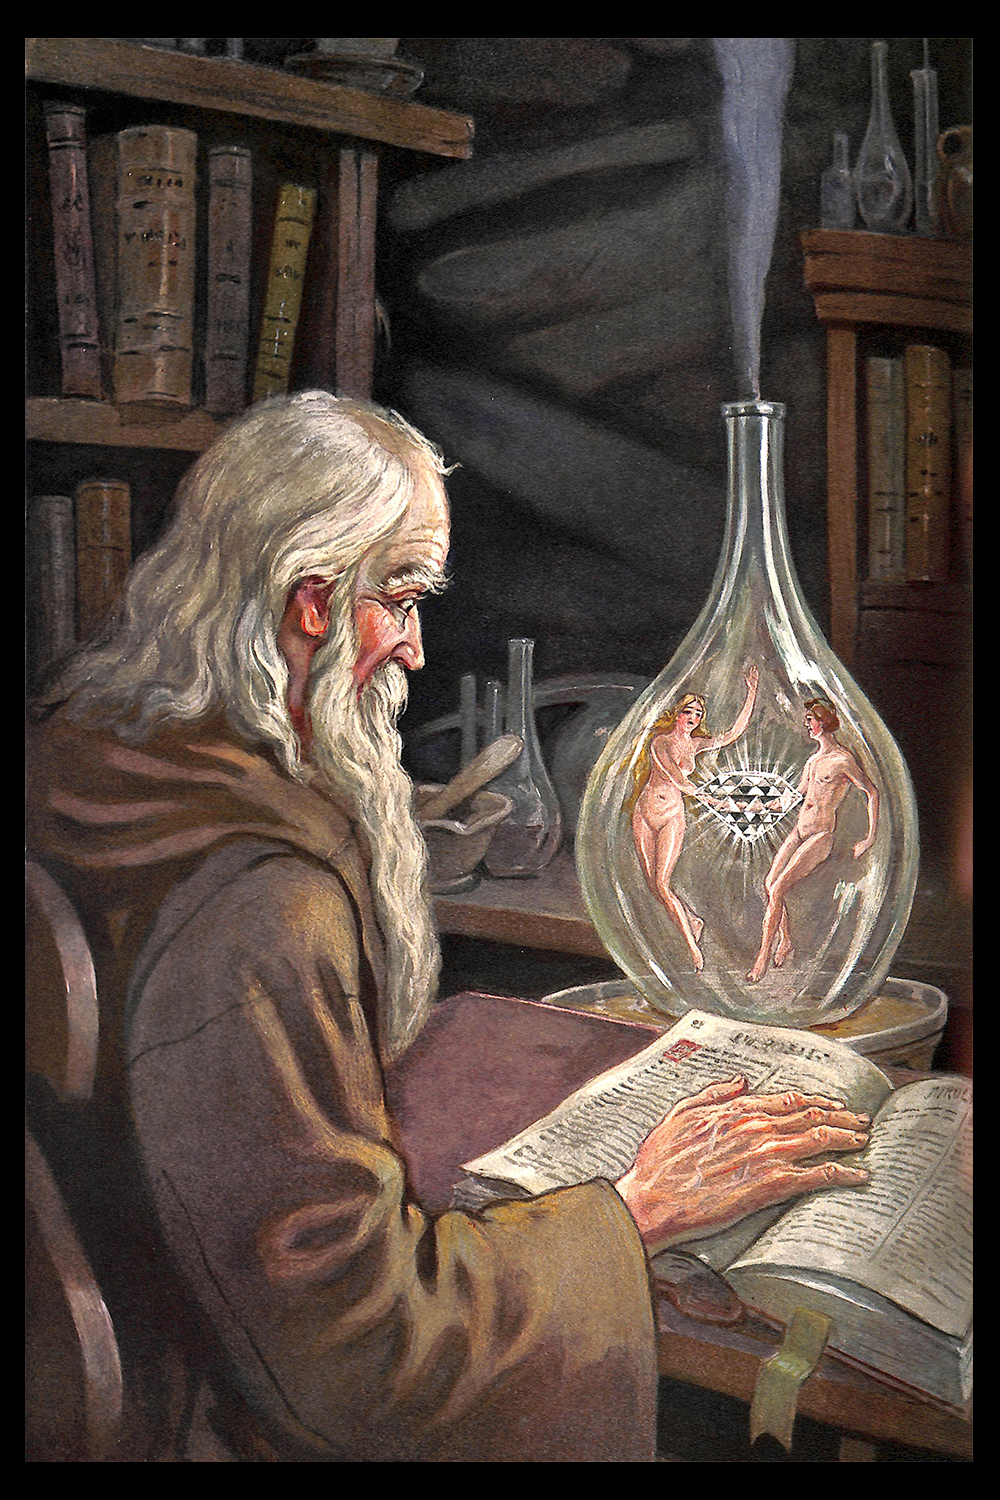 PLATE 23: The Alchemist